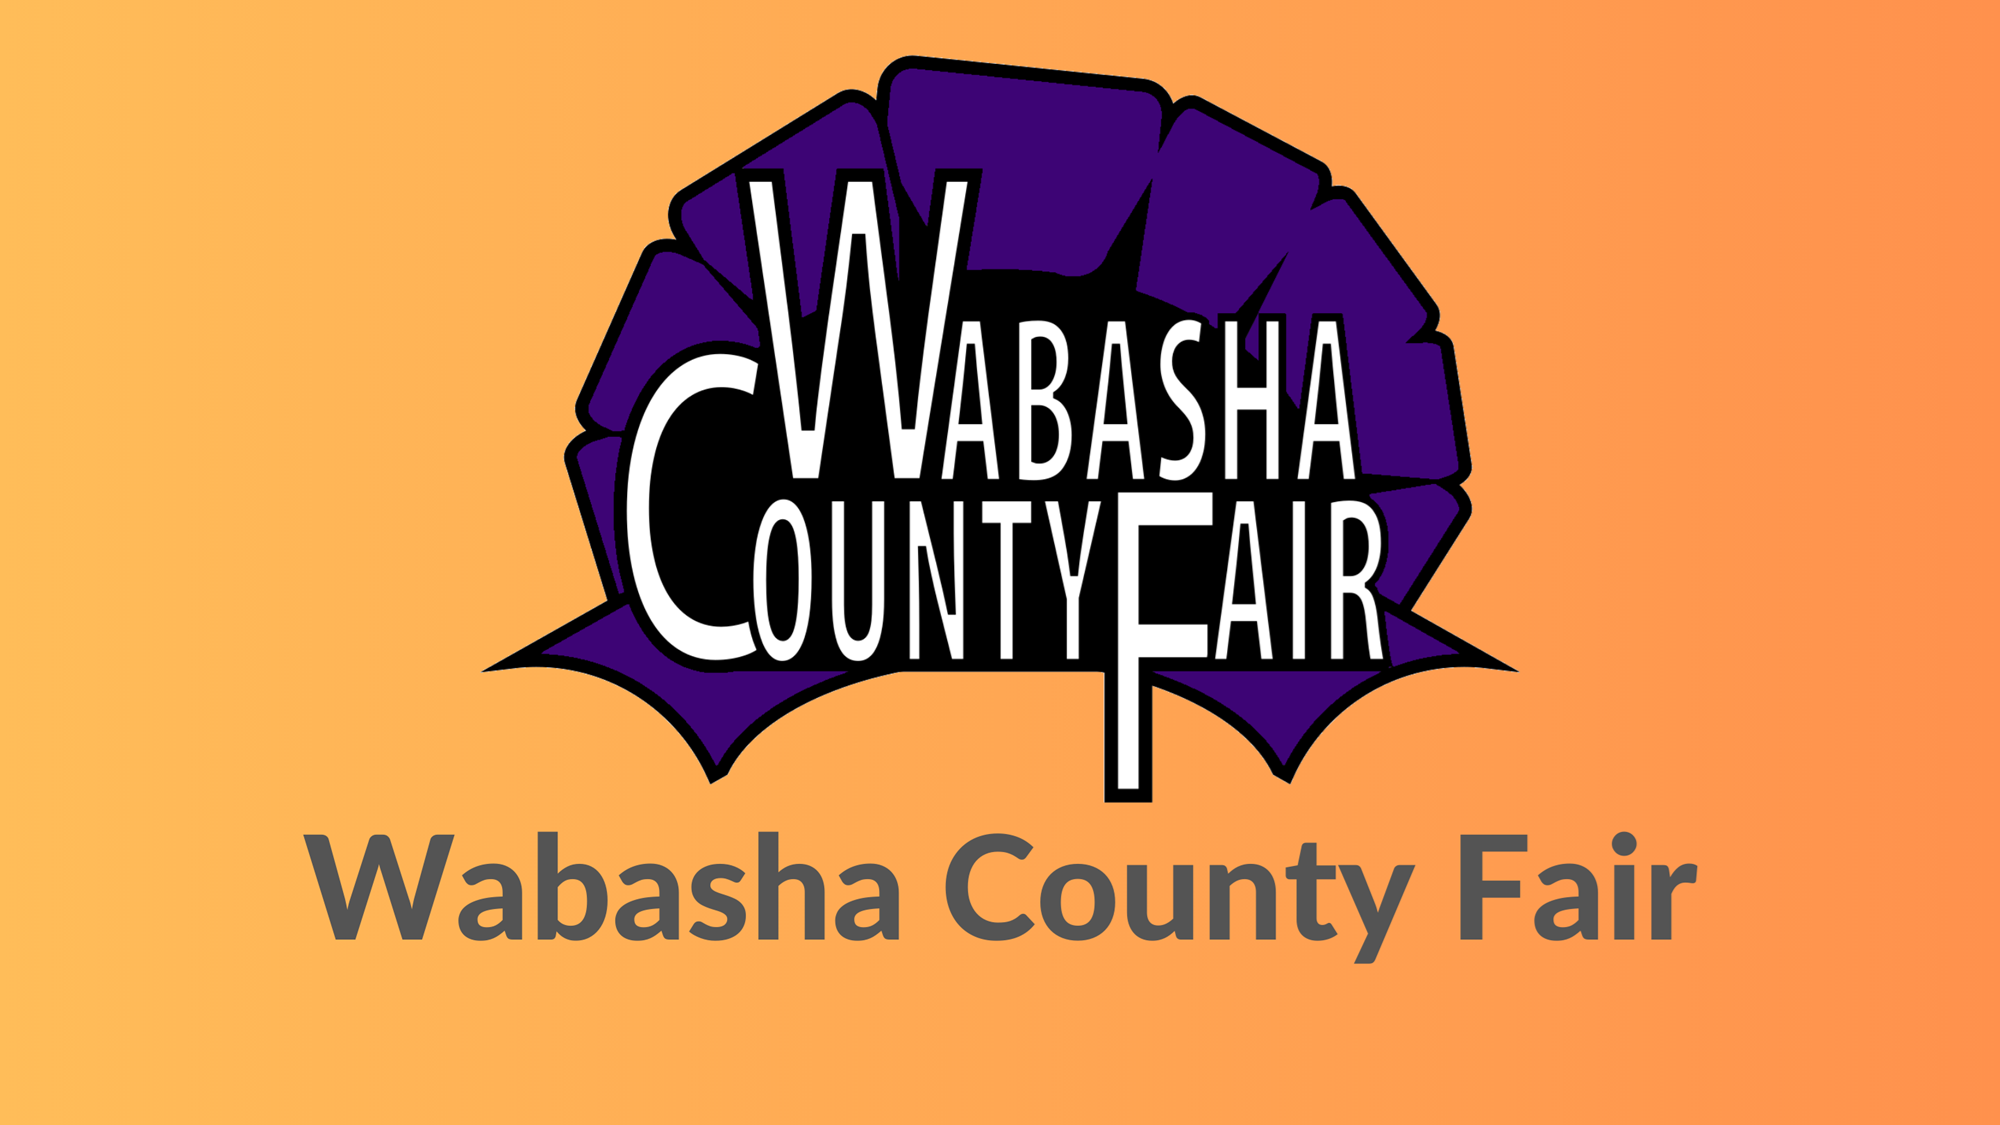 Wabasha County Fair